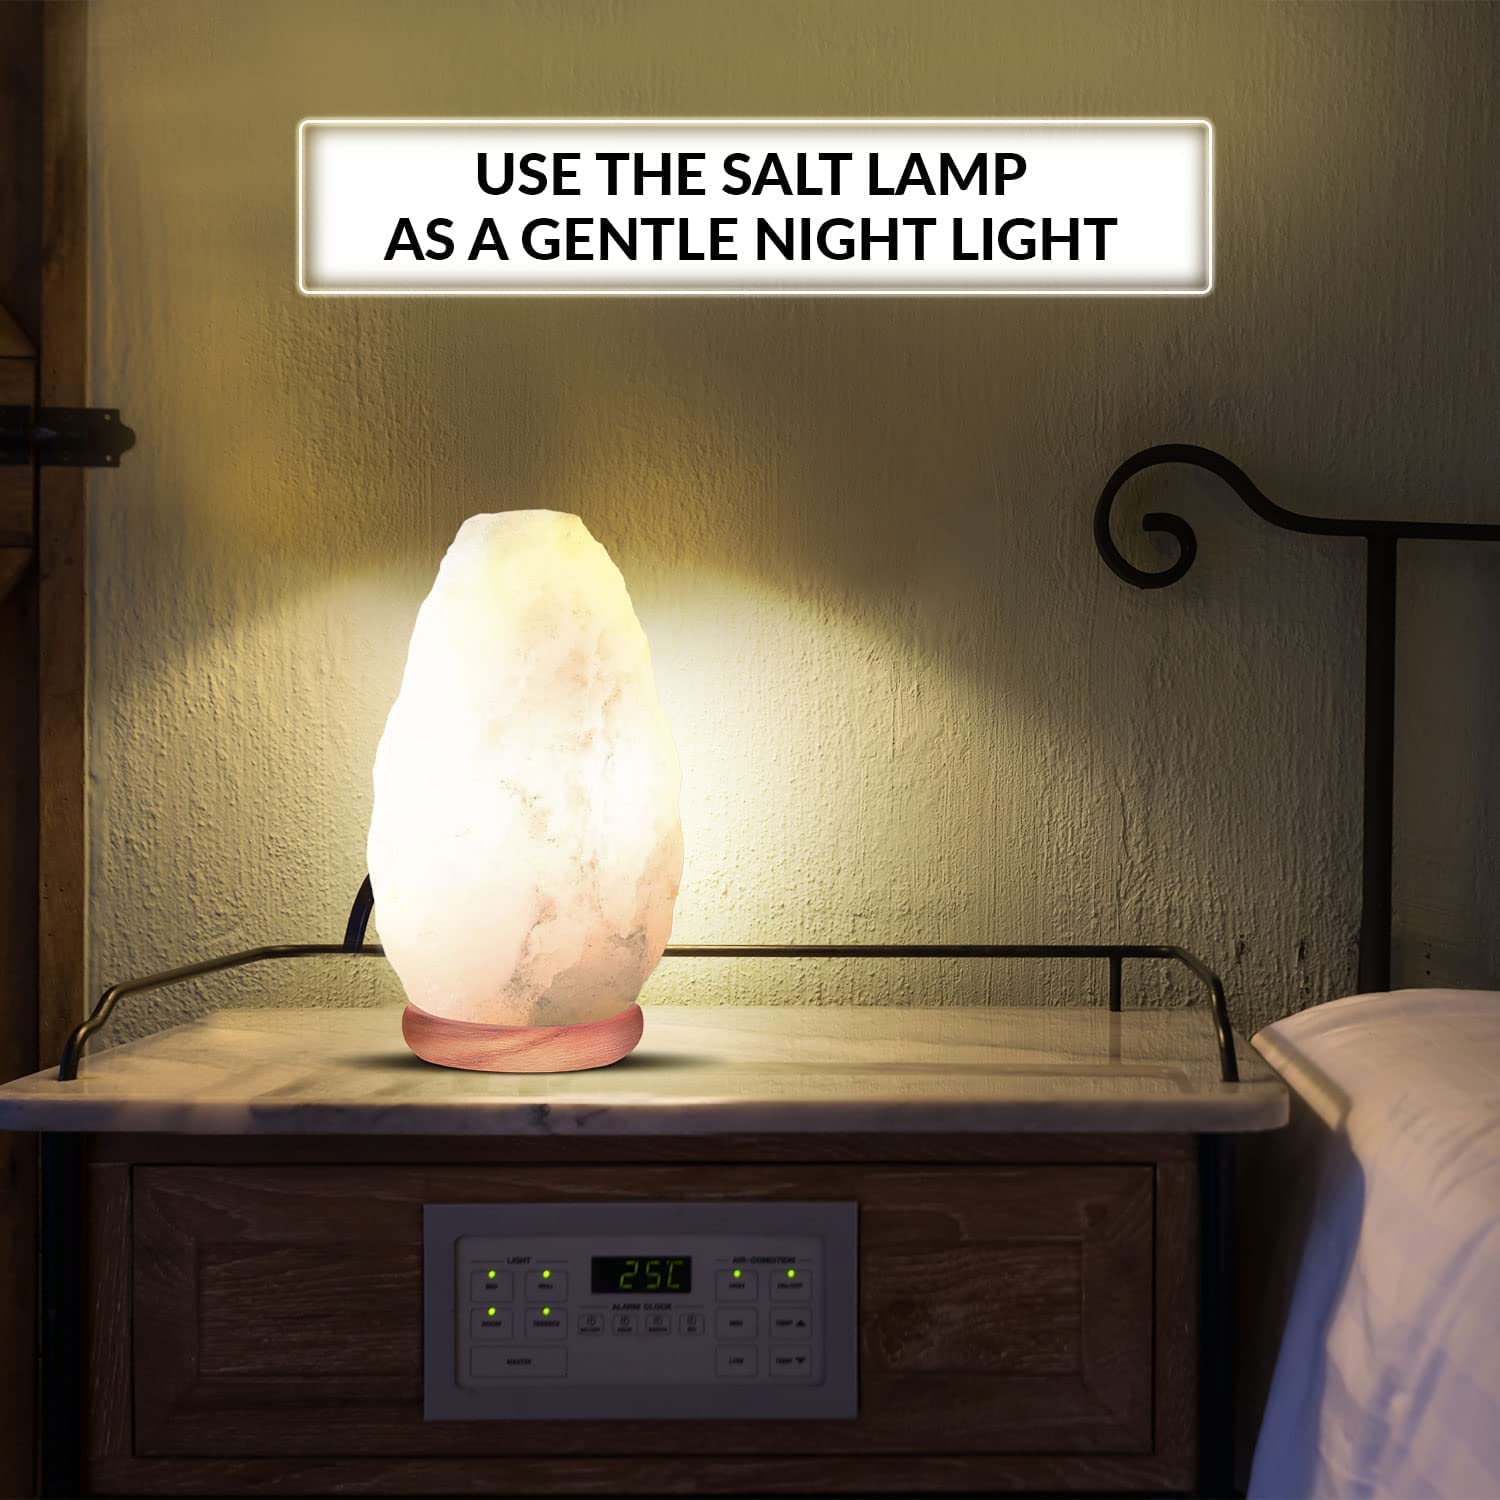 Himalayan Glow White Salt Lamp-6 Lbs